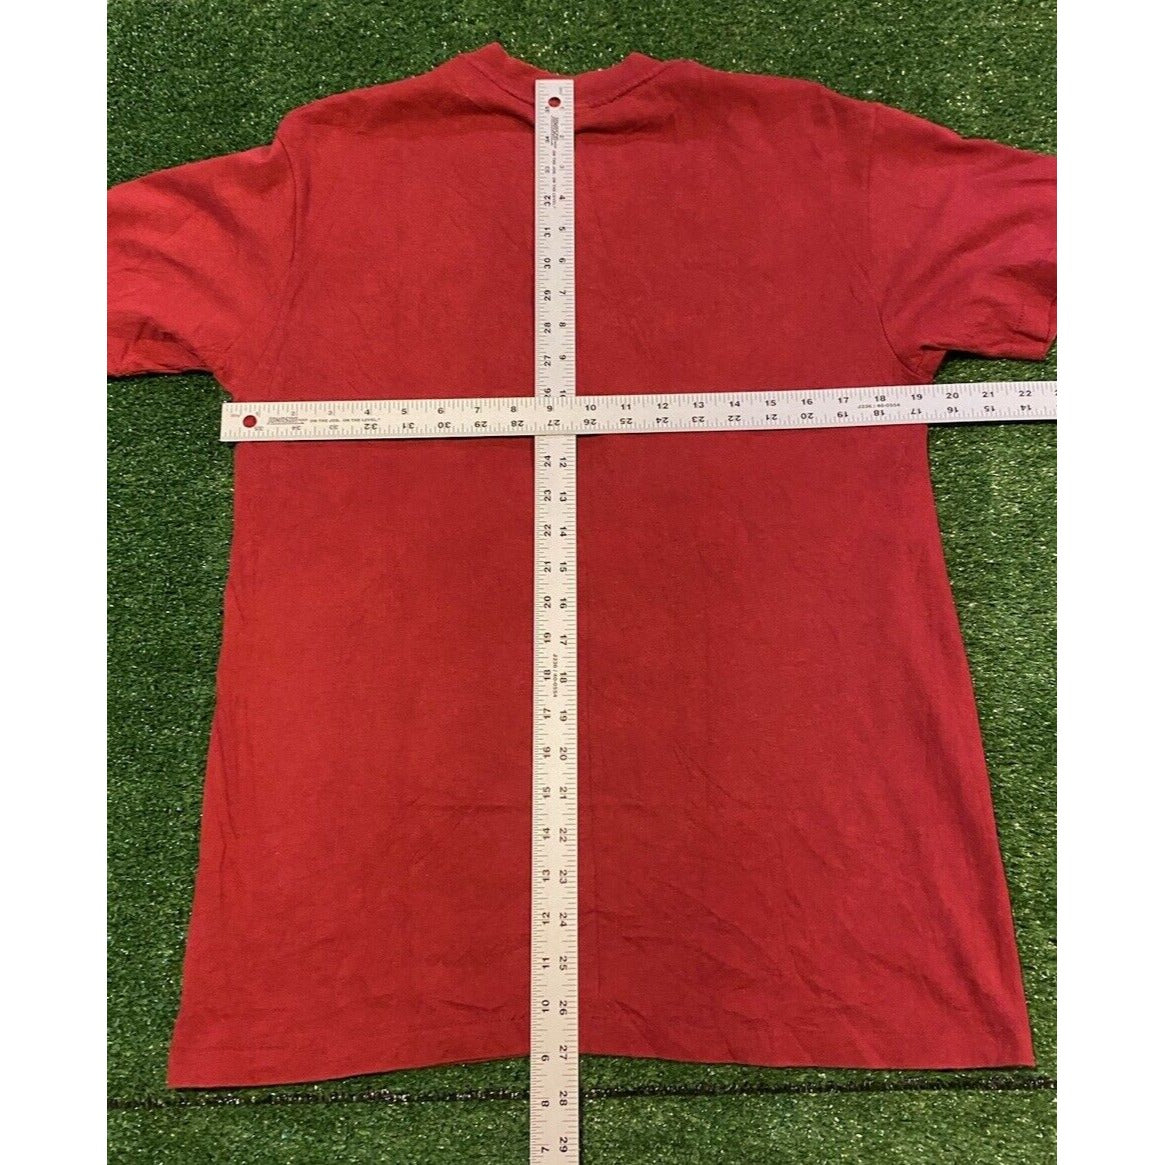 Vintage Washington Redskins shirt medium mens adult 90s red football Commanders